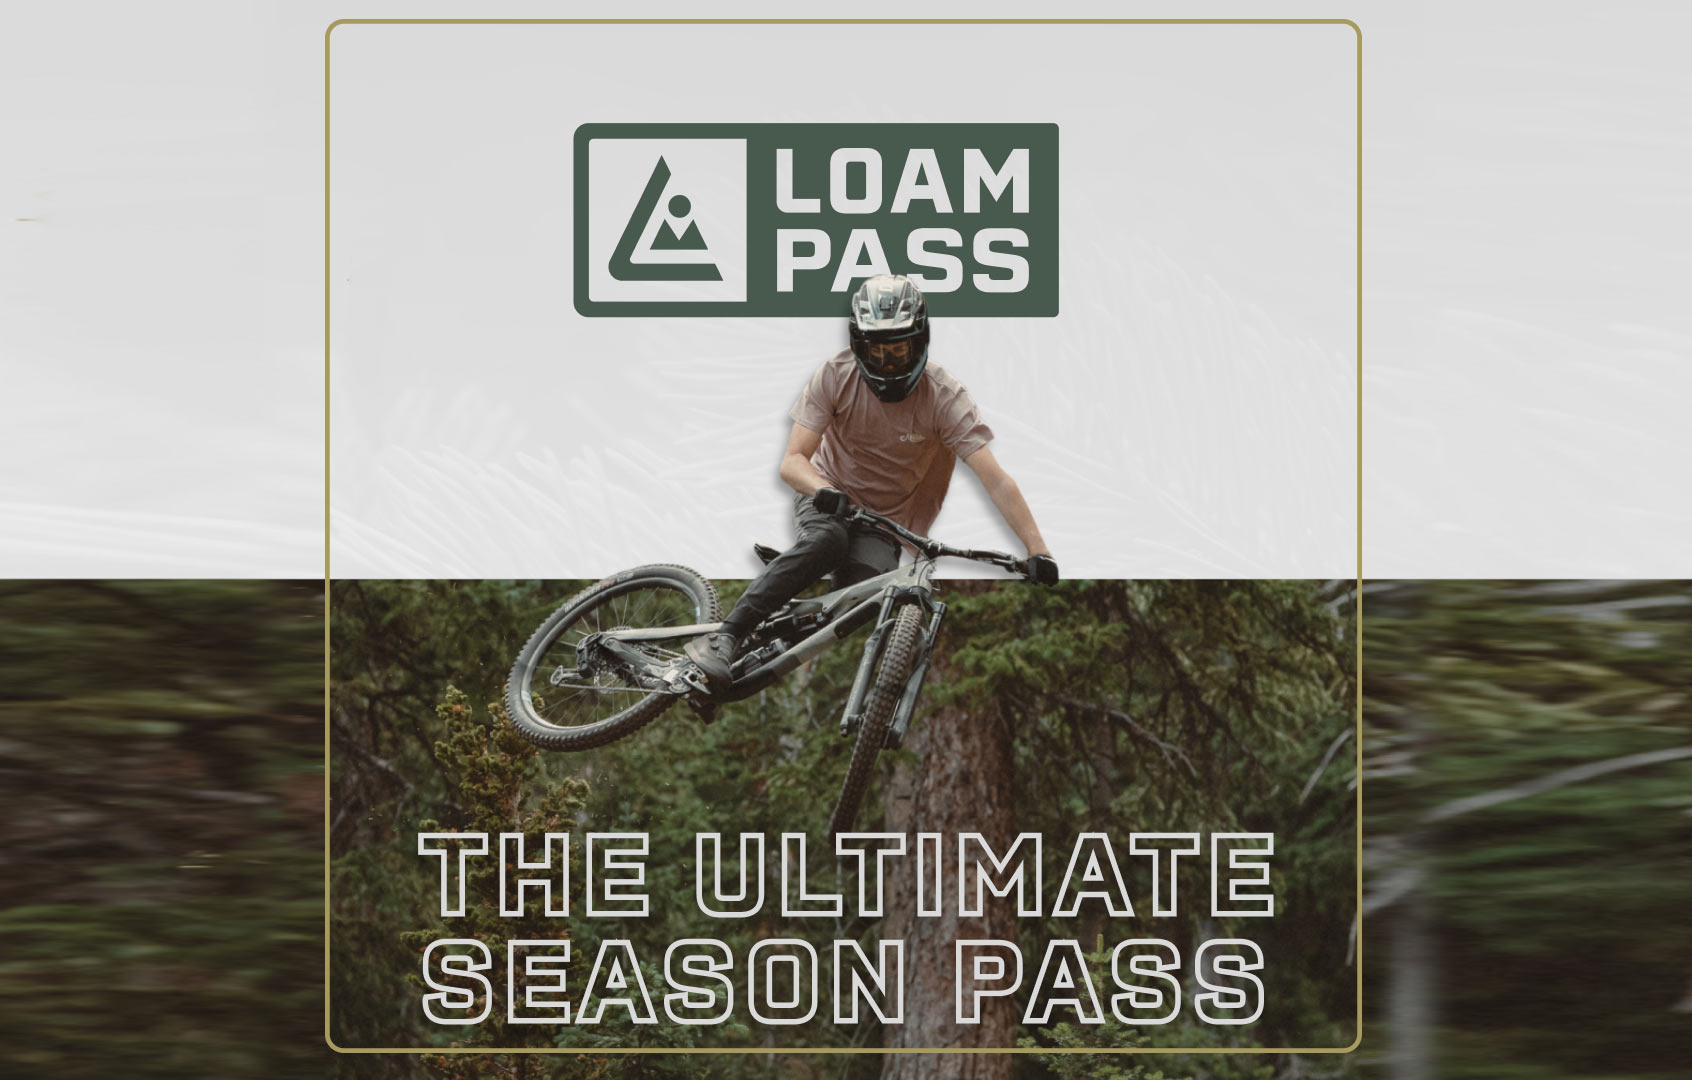 ¡Loam Pass es tu abono de temporada para parques de bicicletas en todas partes!